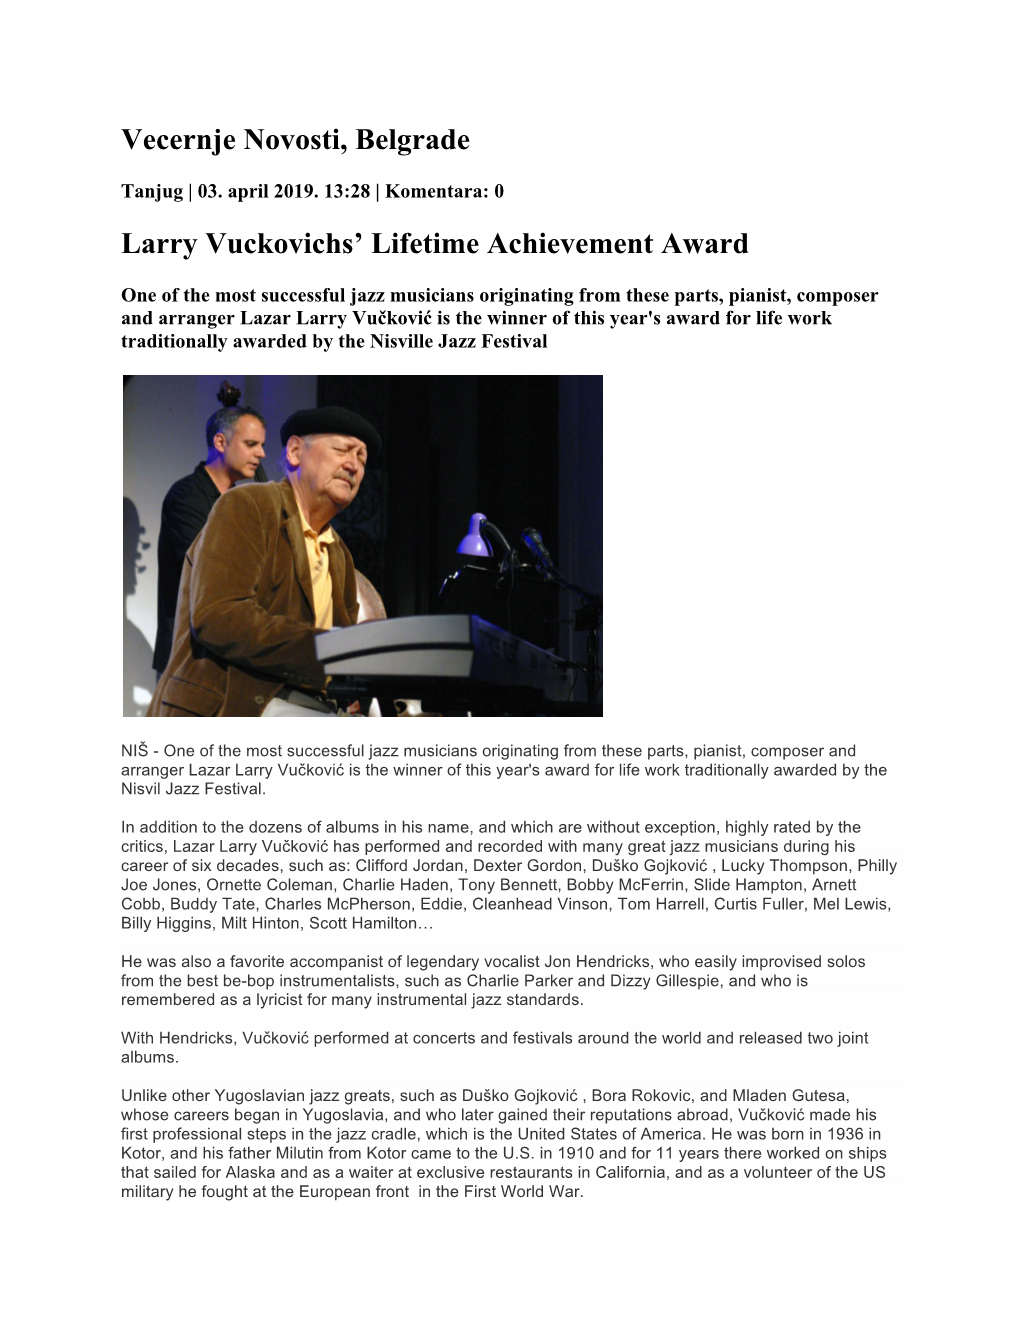 Vecernje Novosti, Belgrade Larry Vuckovichs' Lifetime Achievement Award